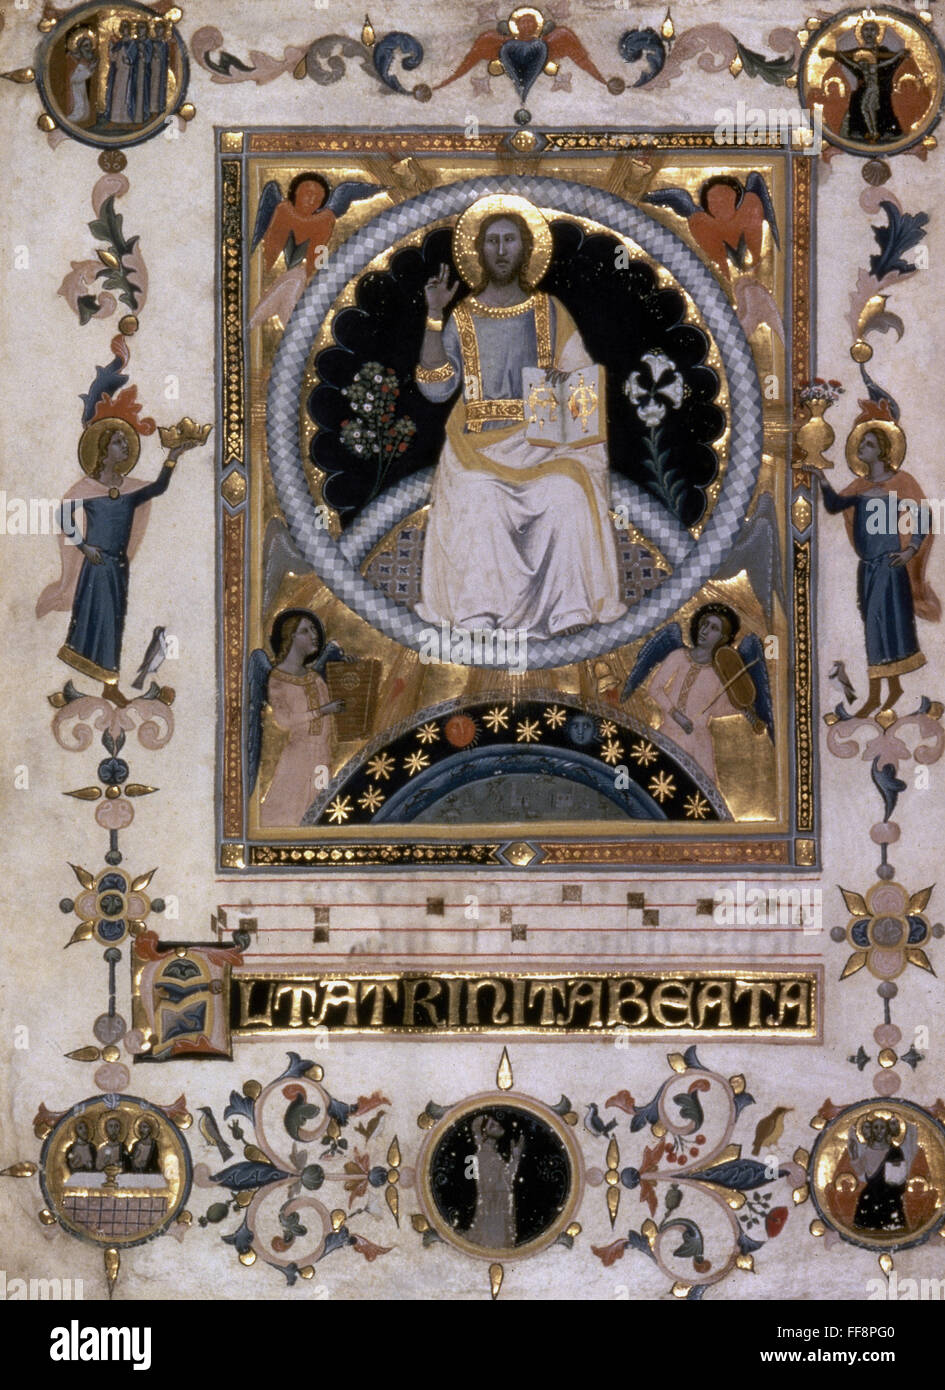 CHRIST IN MAJESTY. /nItalian 14th century manuscript illumination. Stock Photo